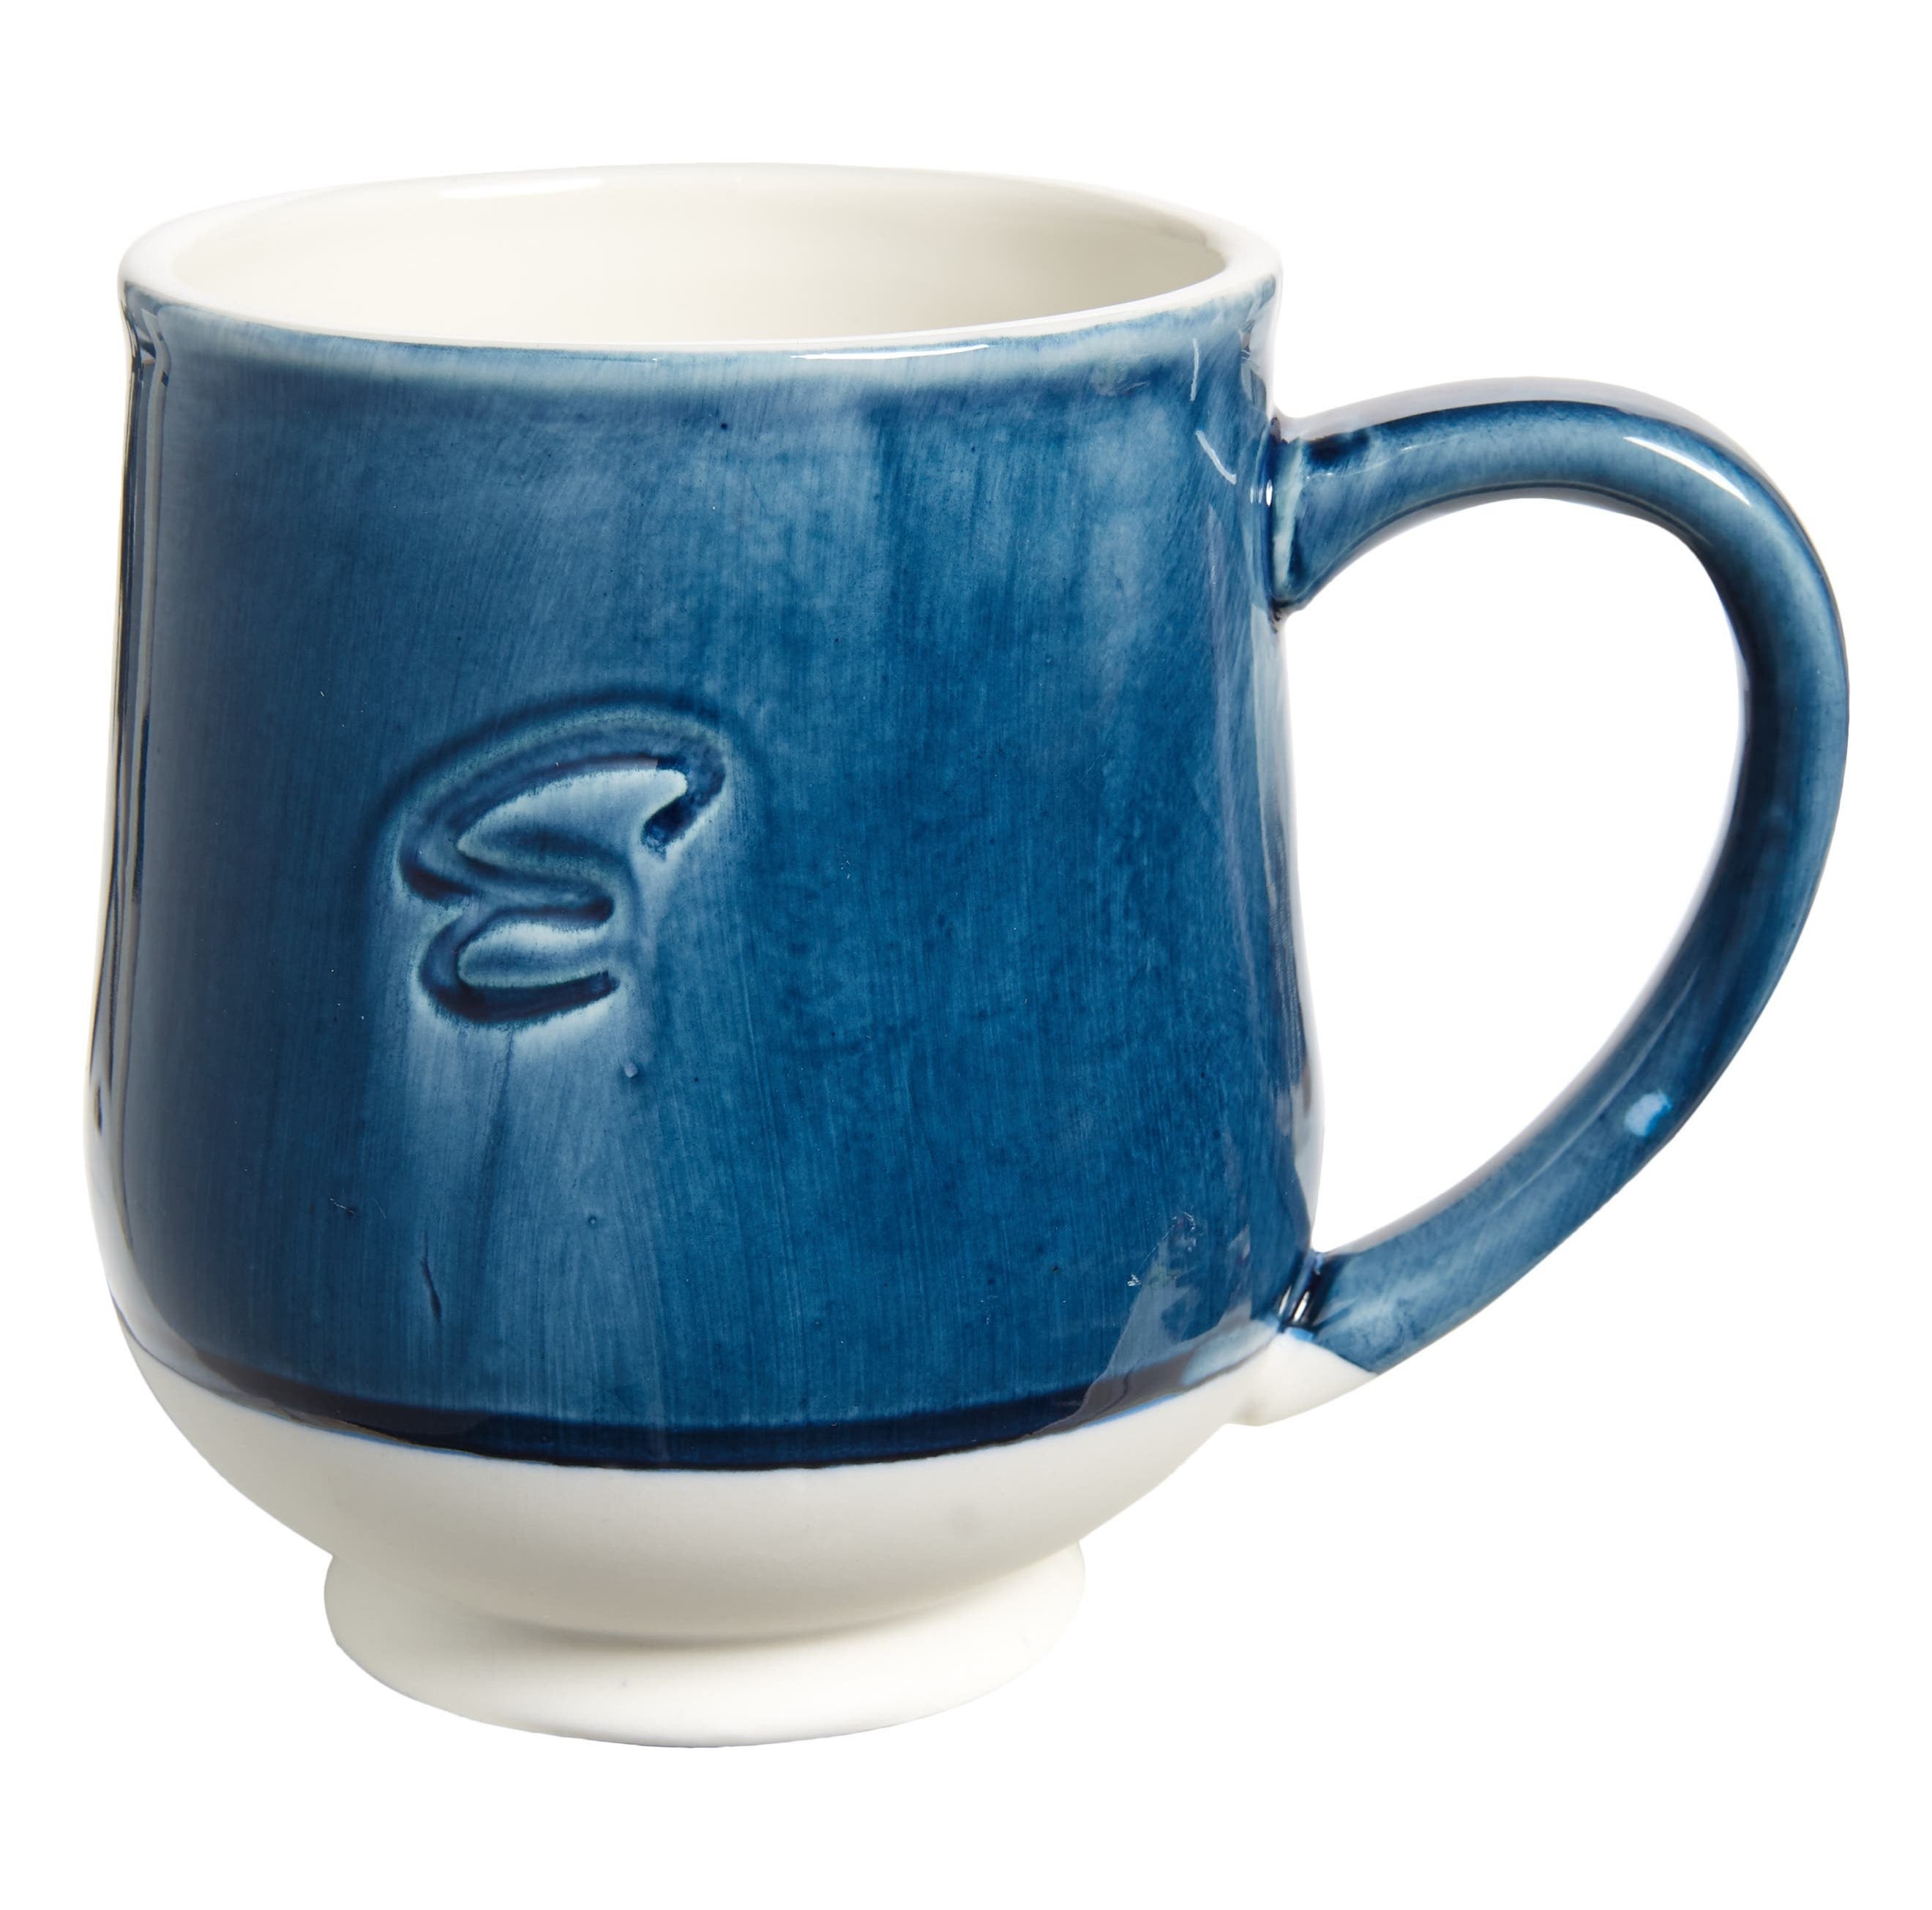 blue monogrammed mug with a glaze over it